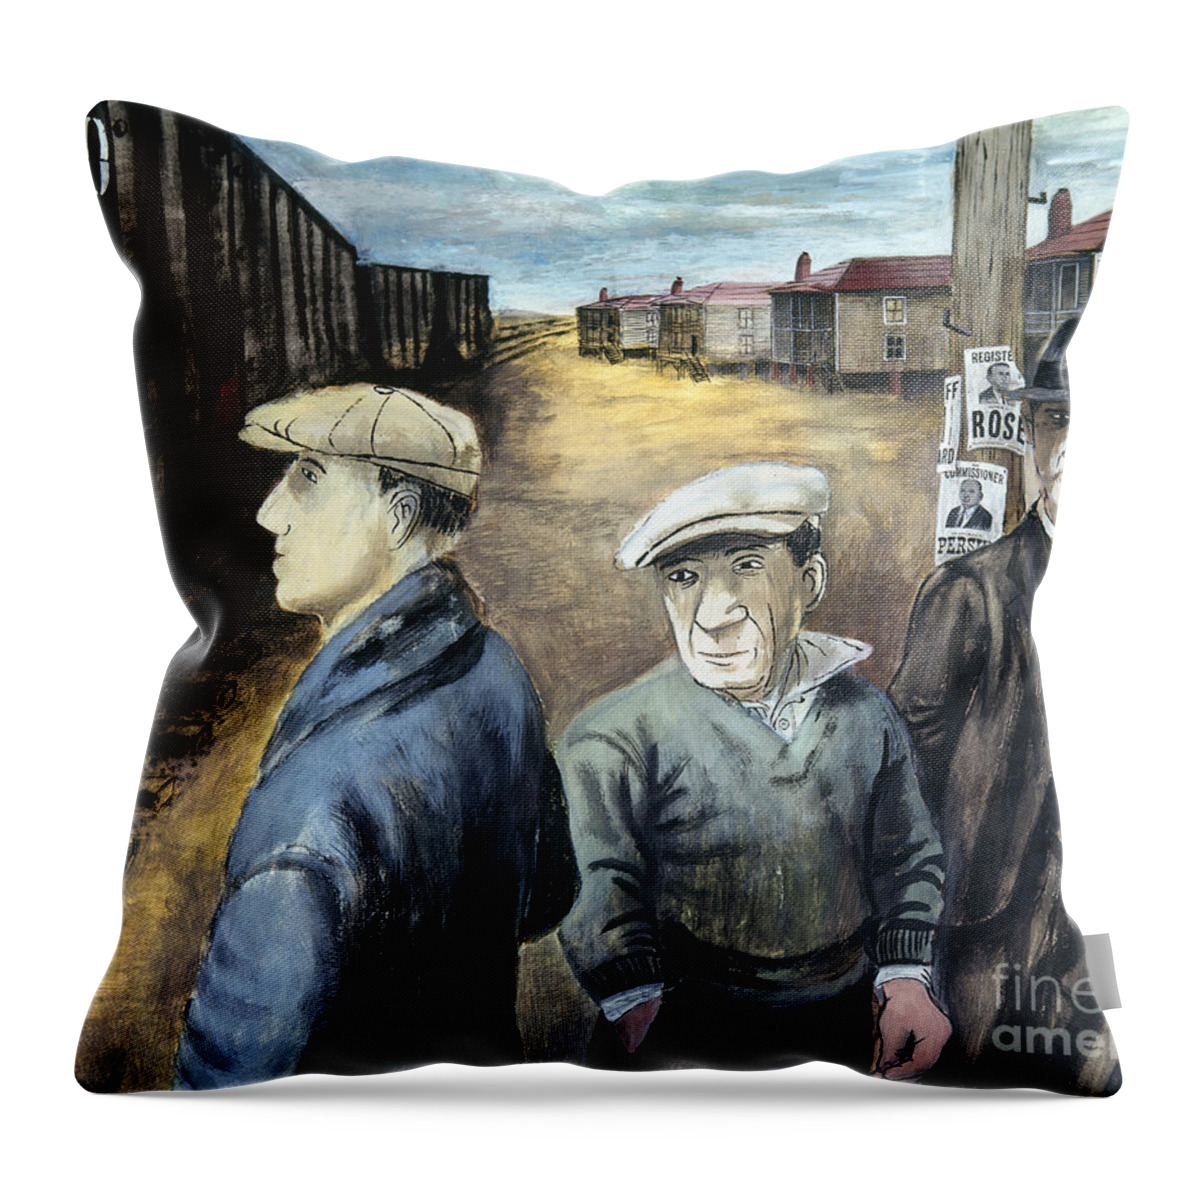 20th Century Throw Pillow featuring the photograph Shahn: Three Men by Granger